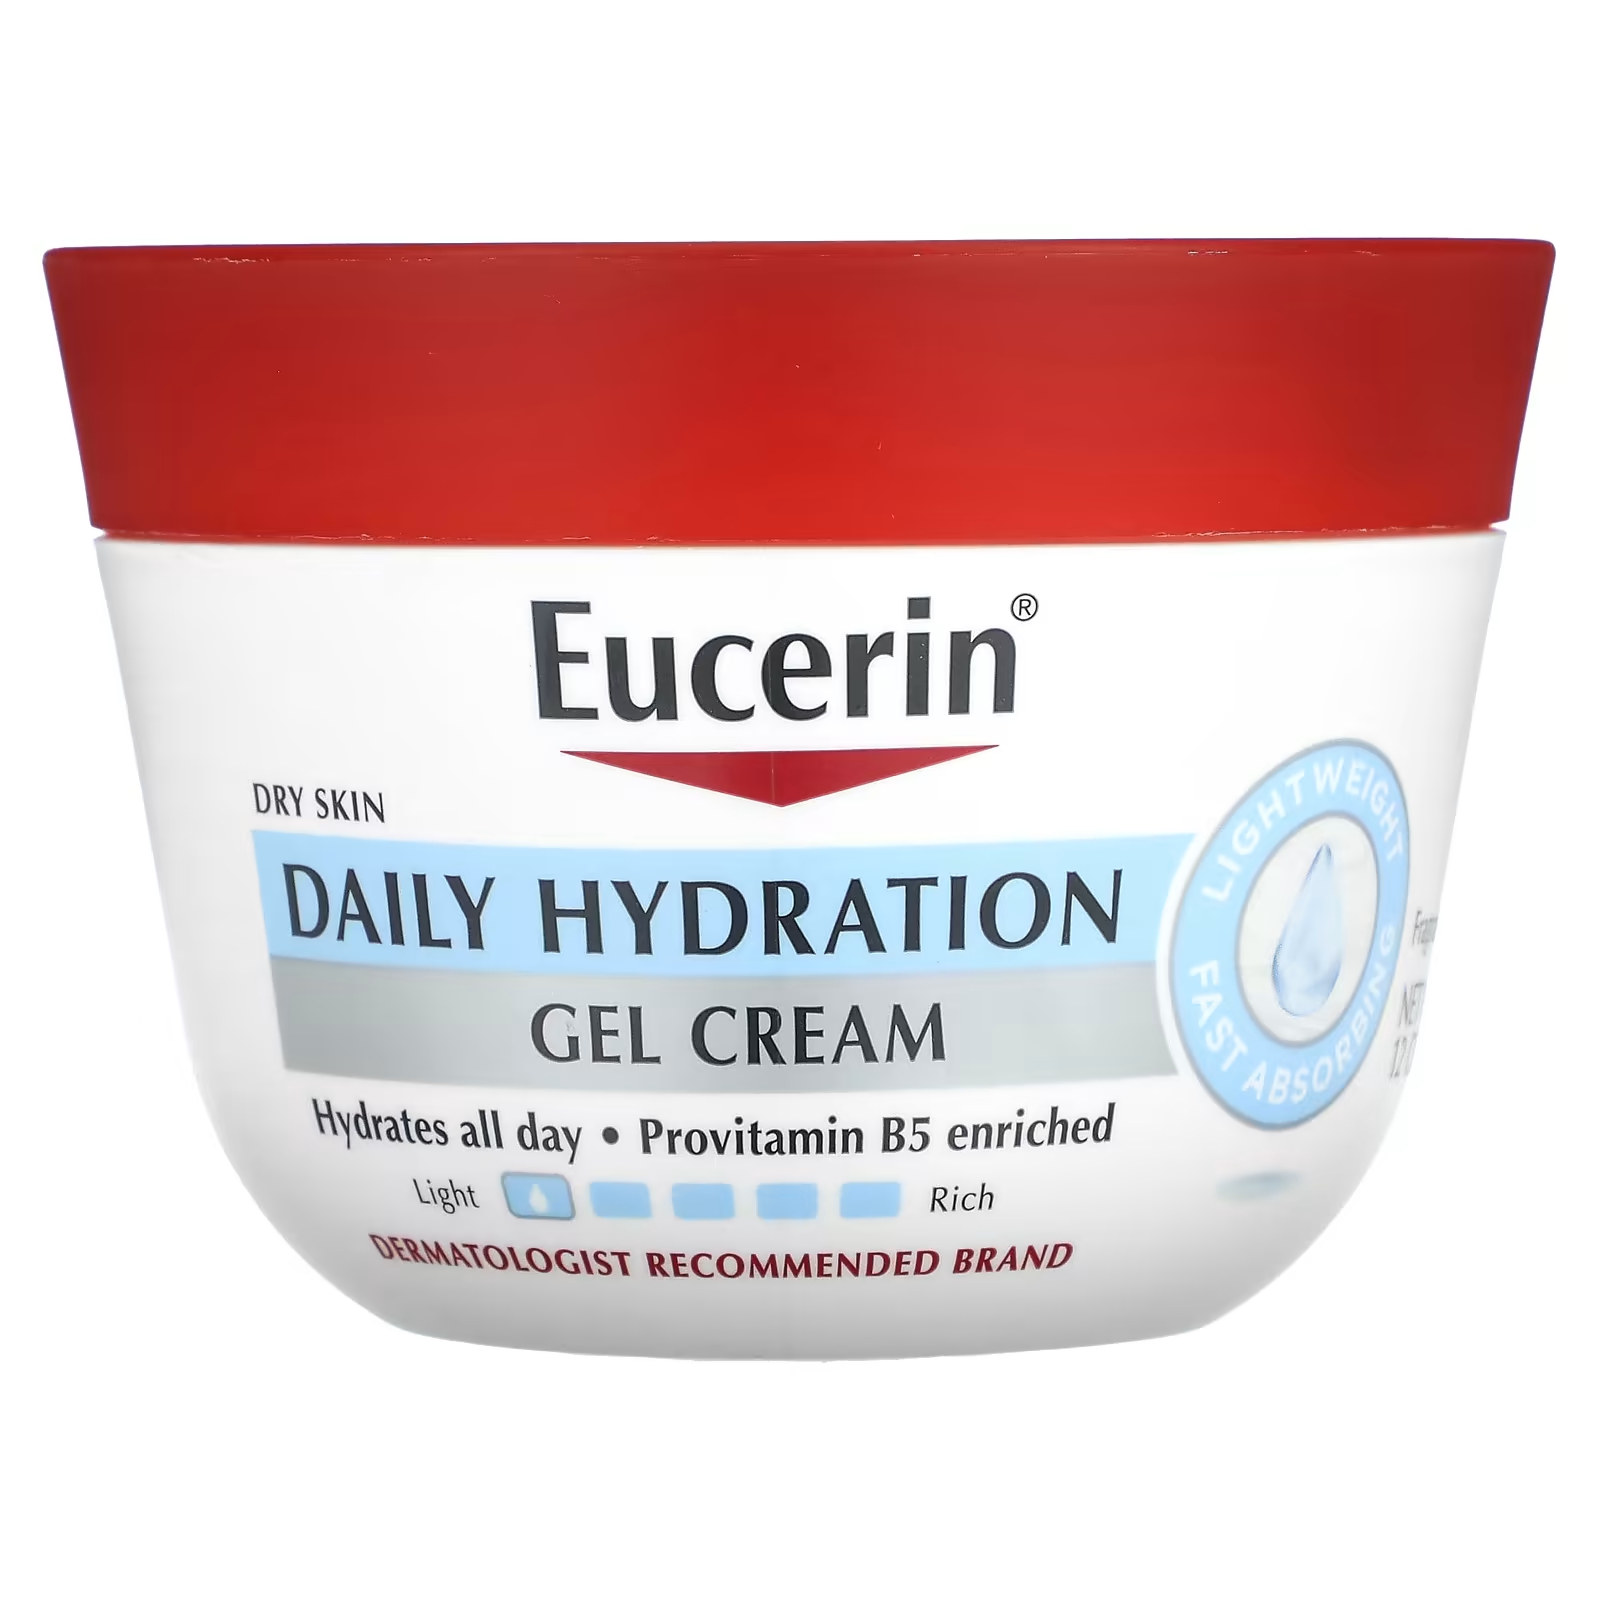 Гель-крем Daily Hydration без ароматизаторов, 12 унций (340 г) Eucerin